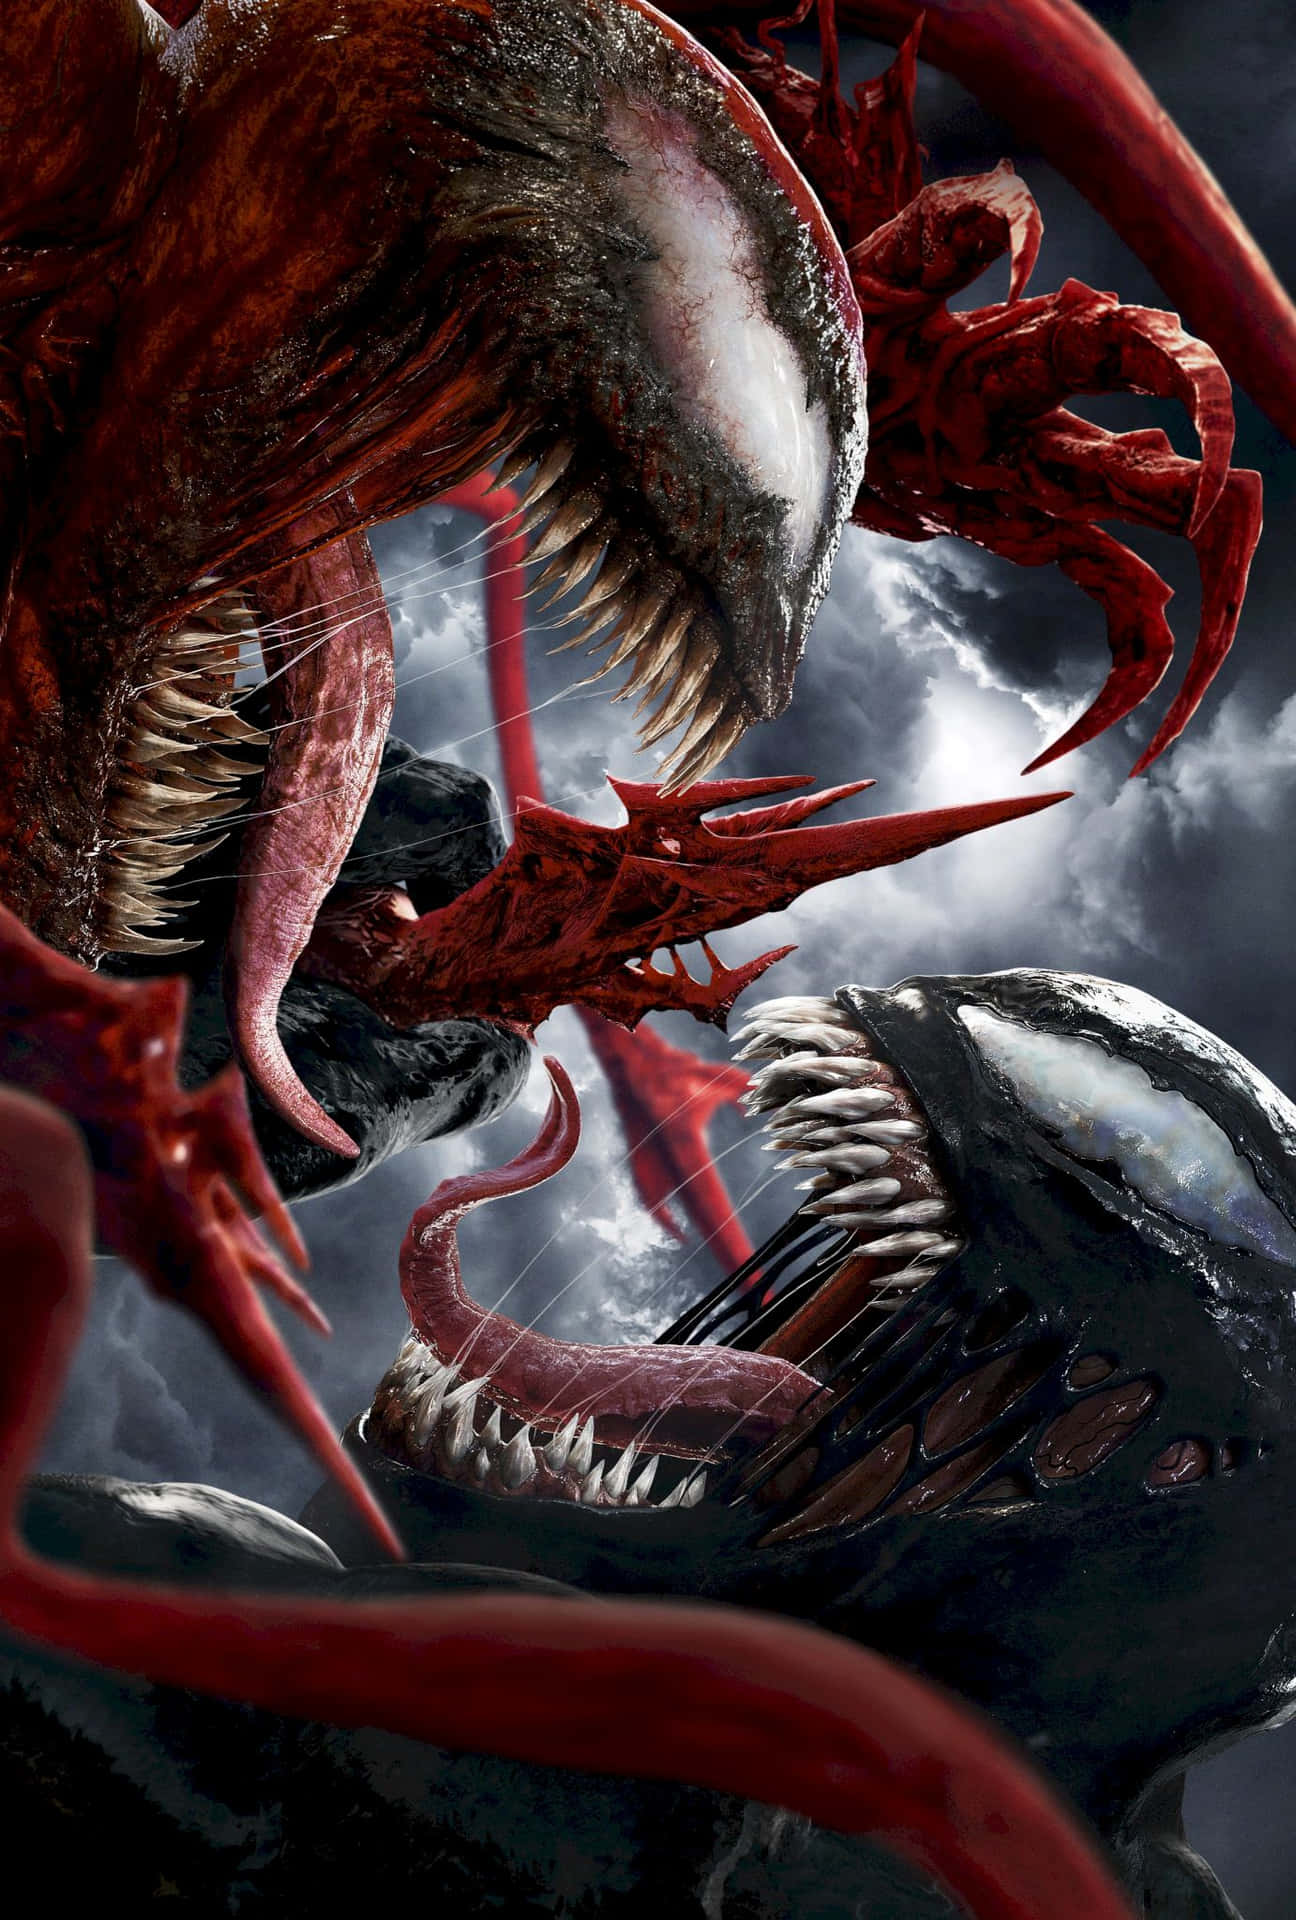 Episk Showdown: Venom mod Carnage. Wallpaper